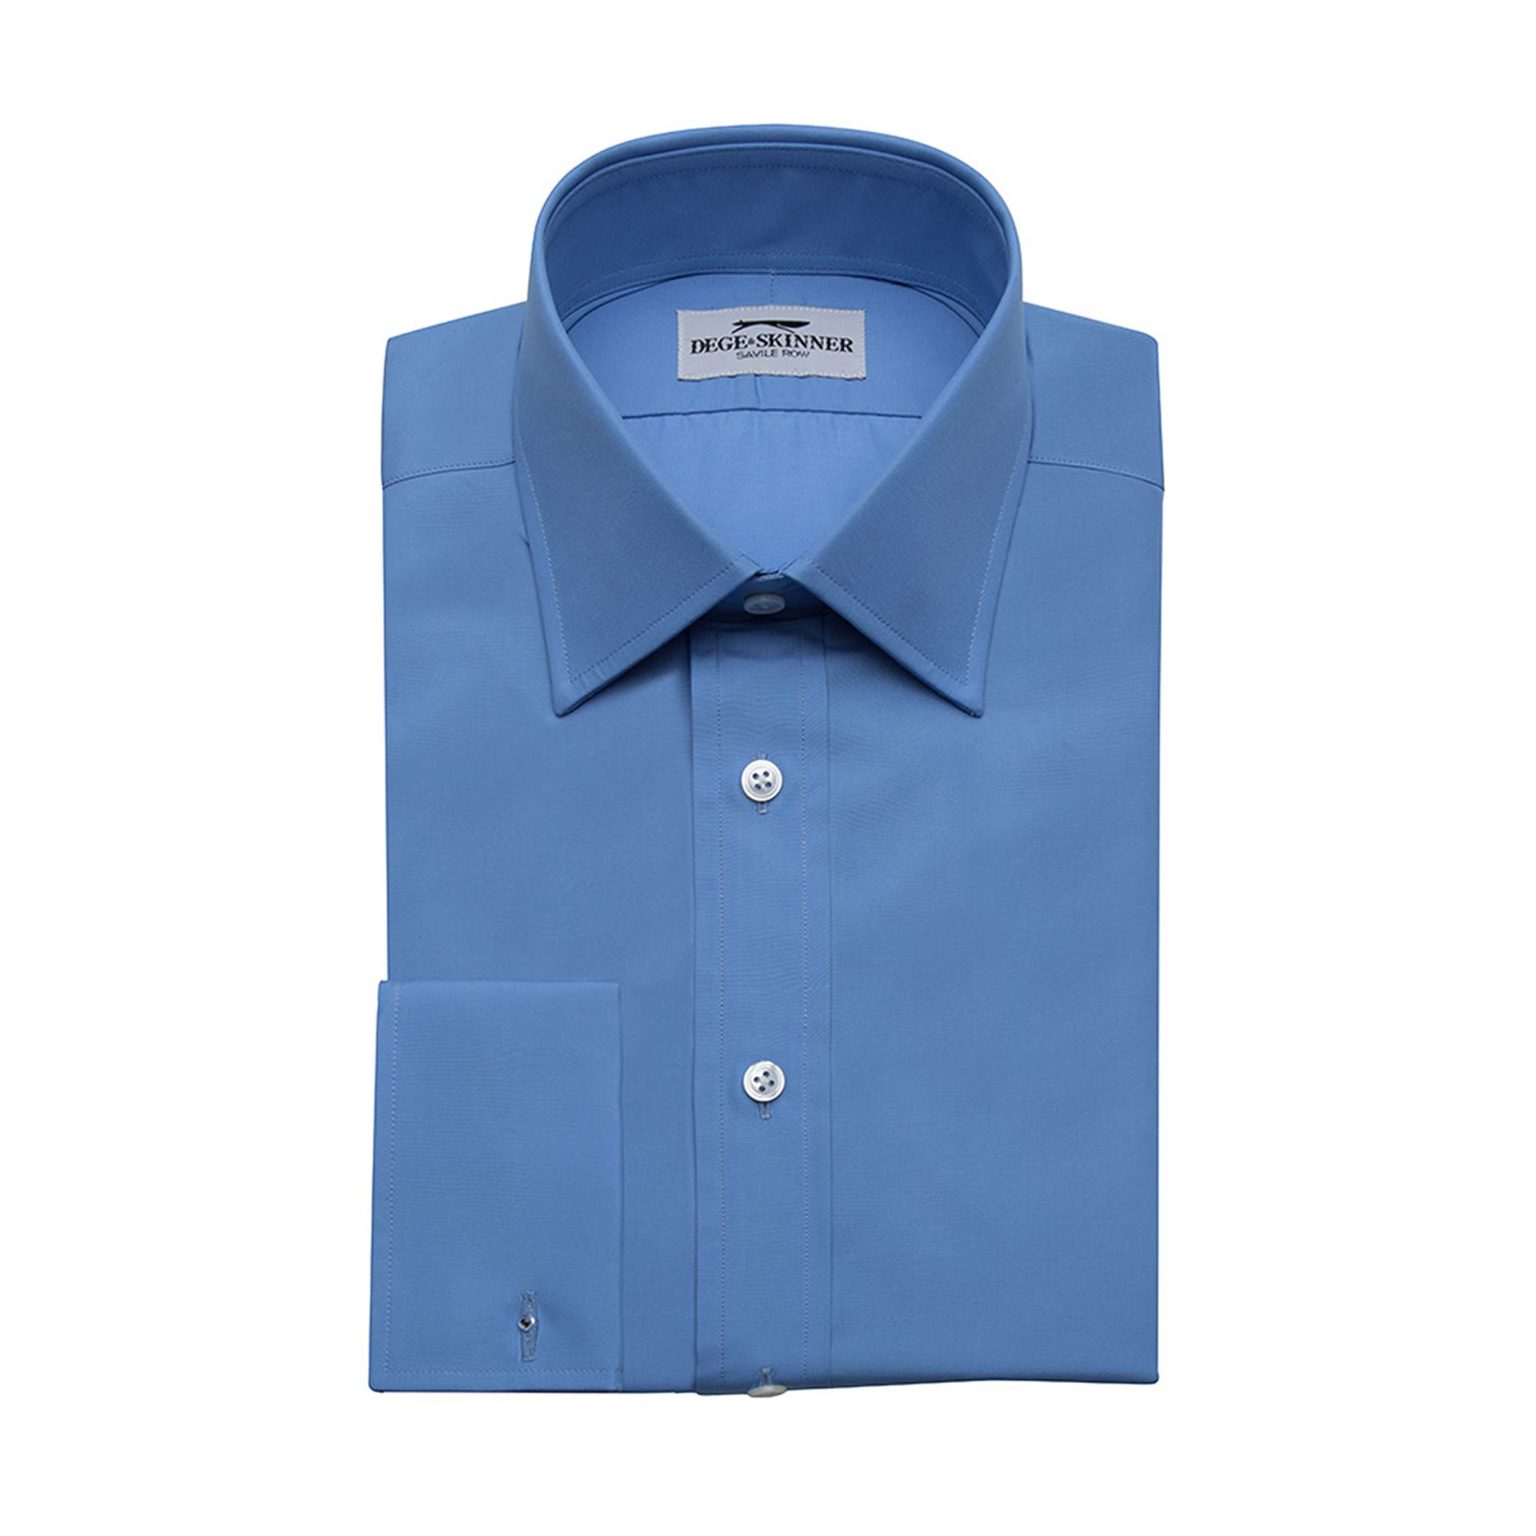 Cornflower Blue Poplin Cotton Shirt, Double French Cuff - Dege & Skinner